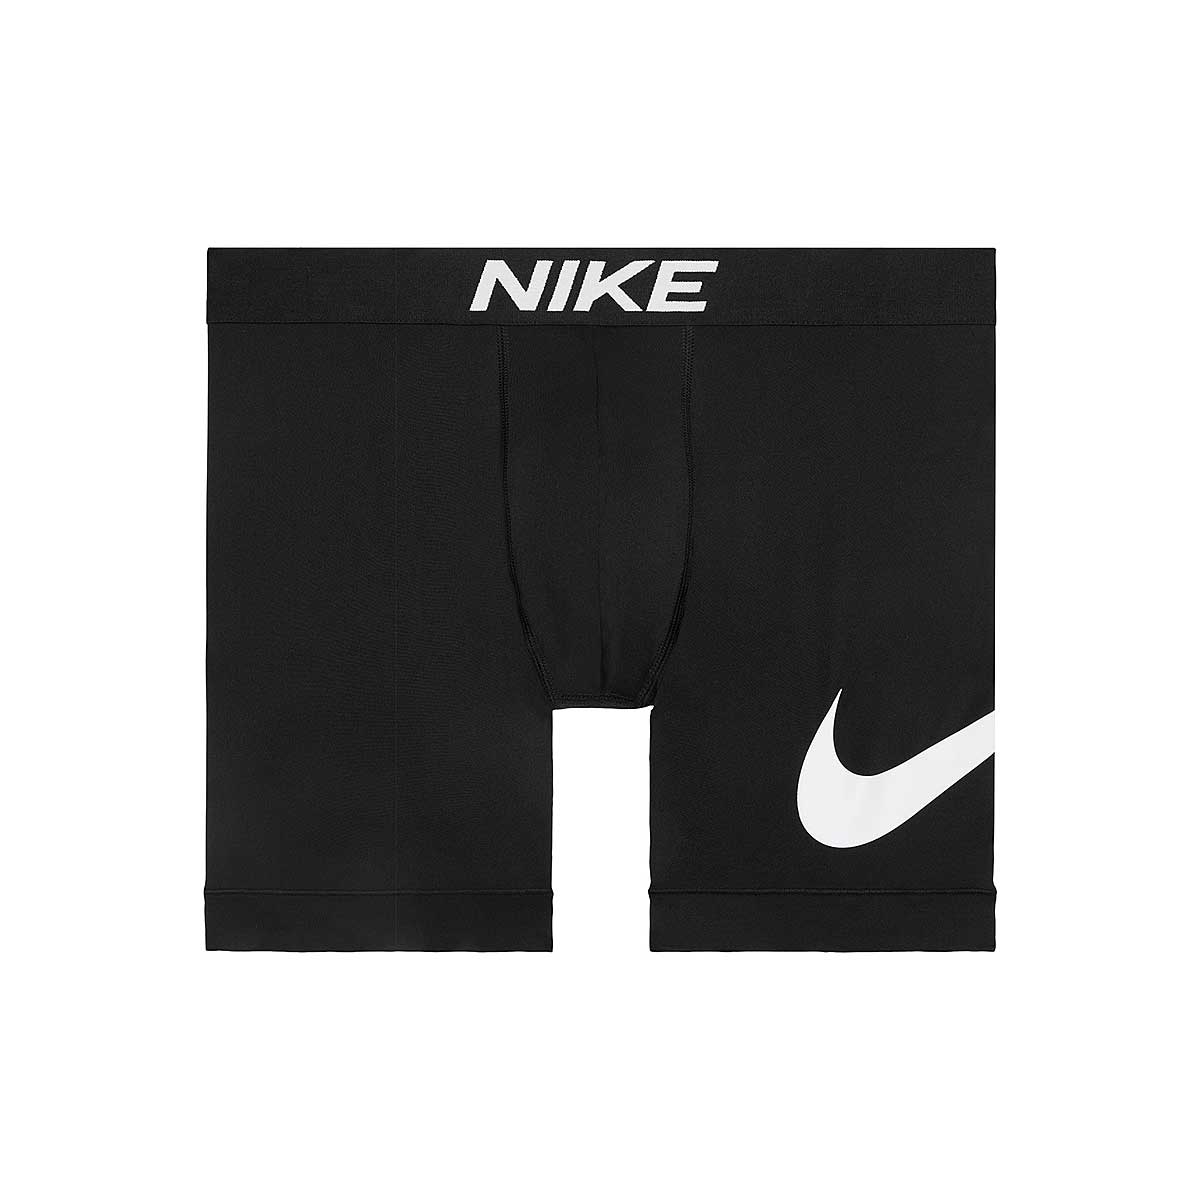 Image of Nike Boxer Brief, Black/white